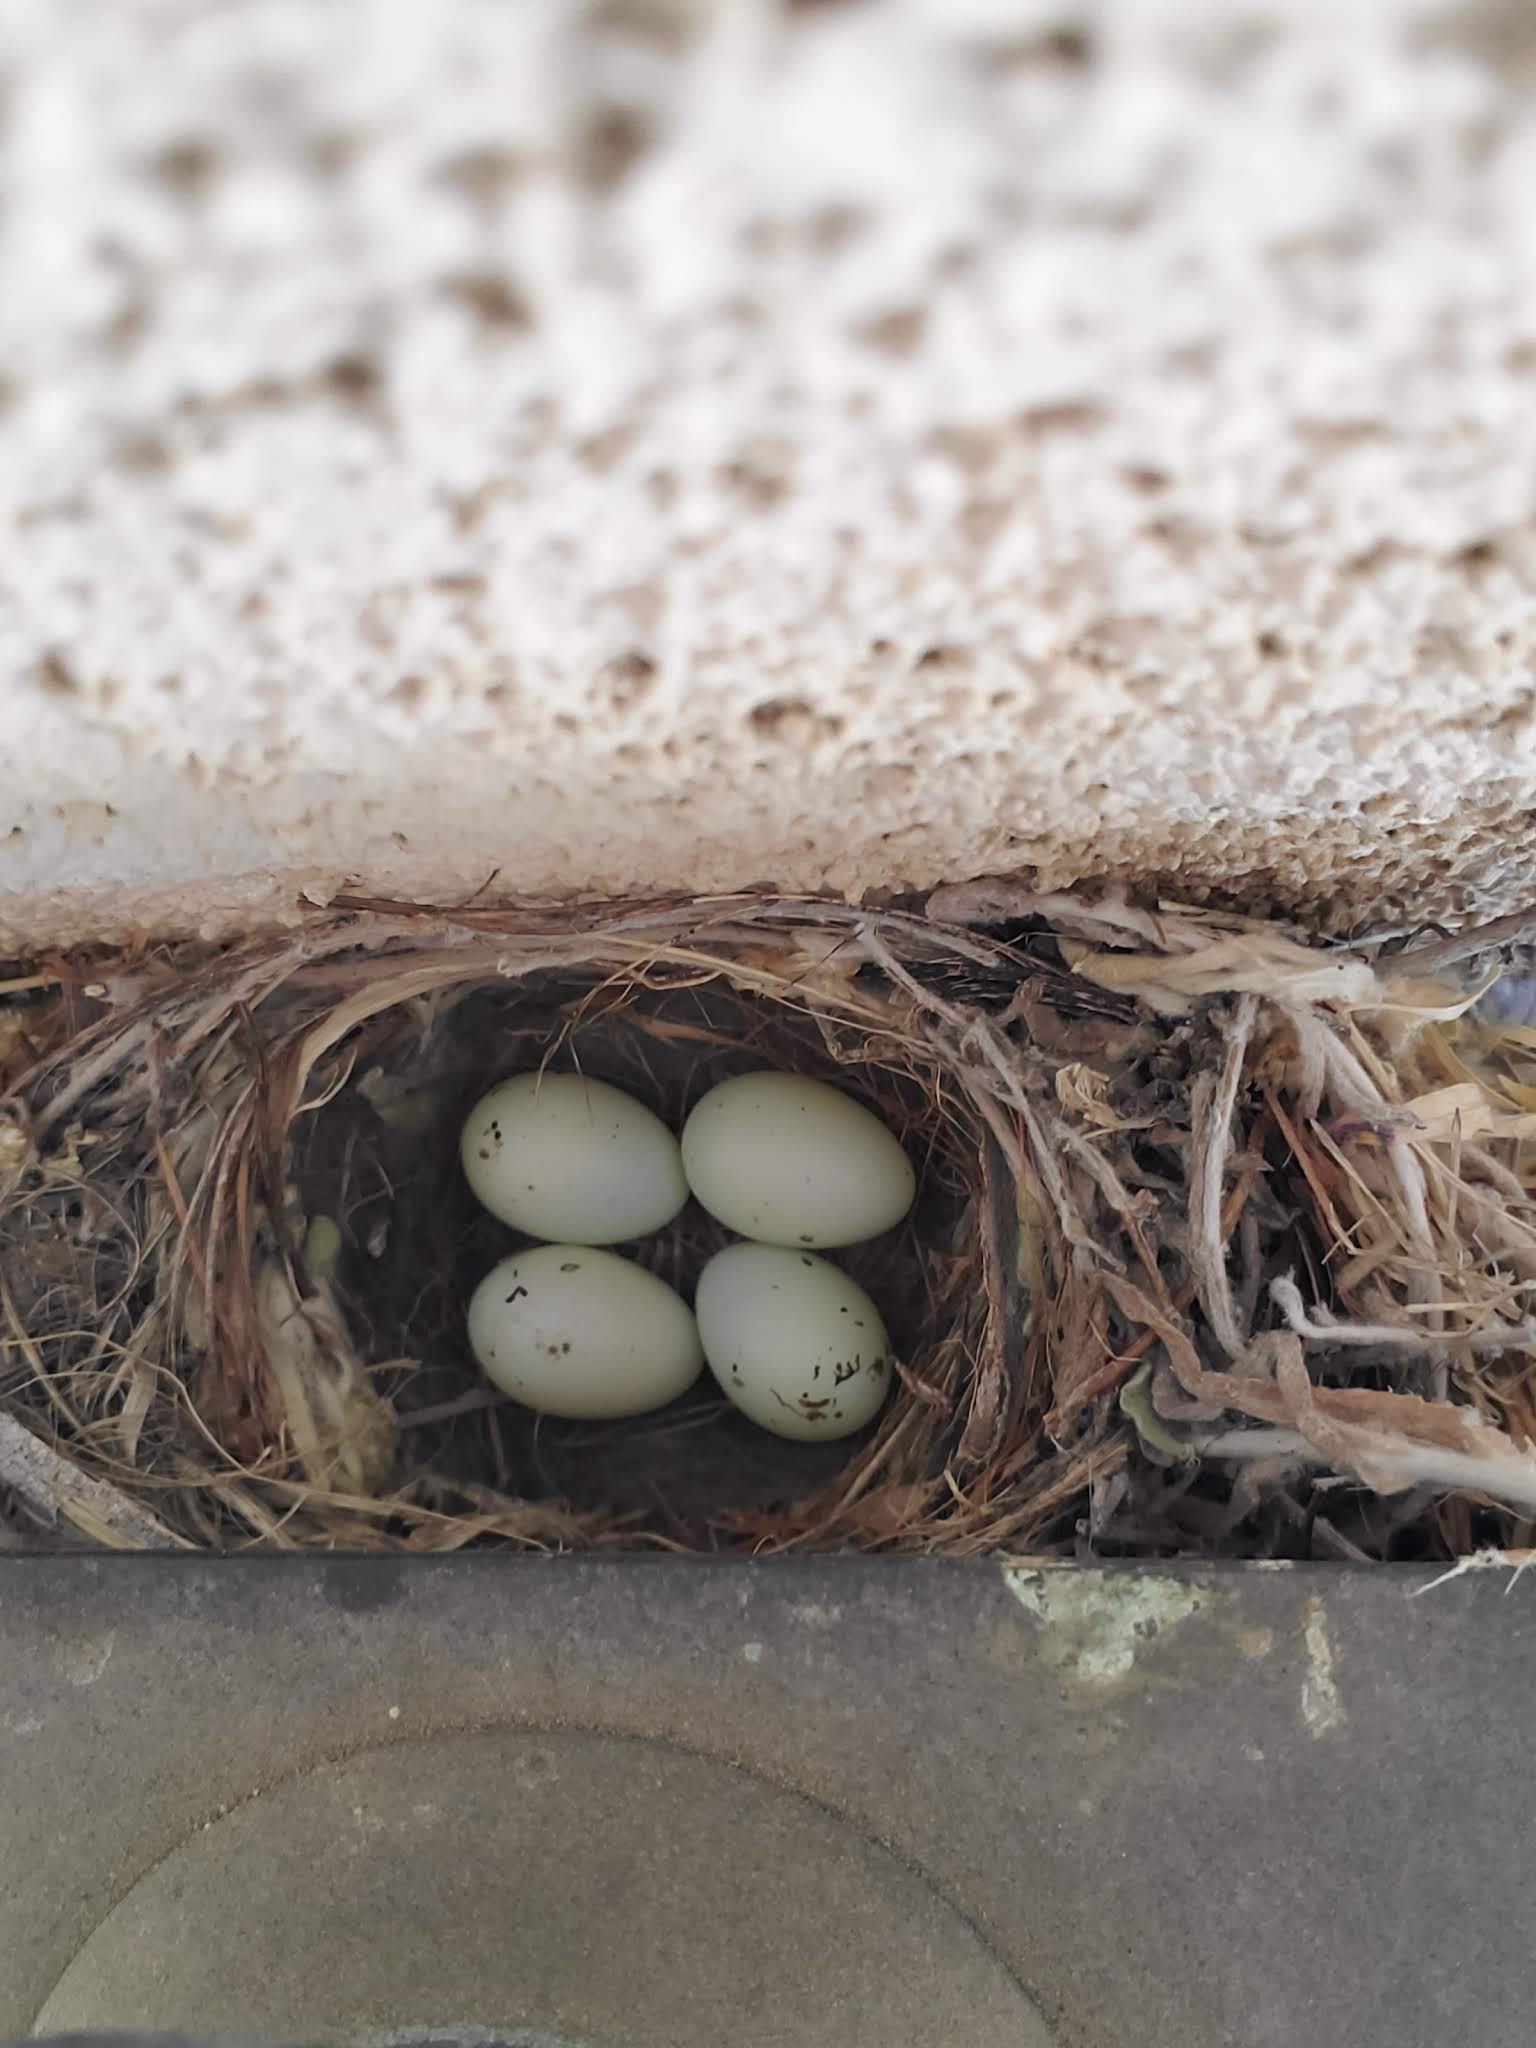 Secret house finch nest discovery